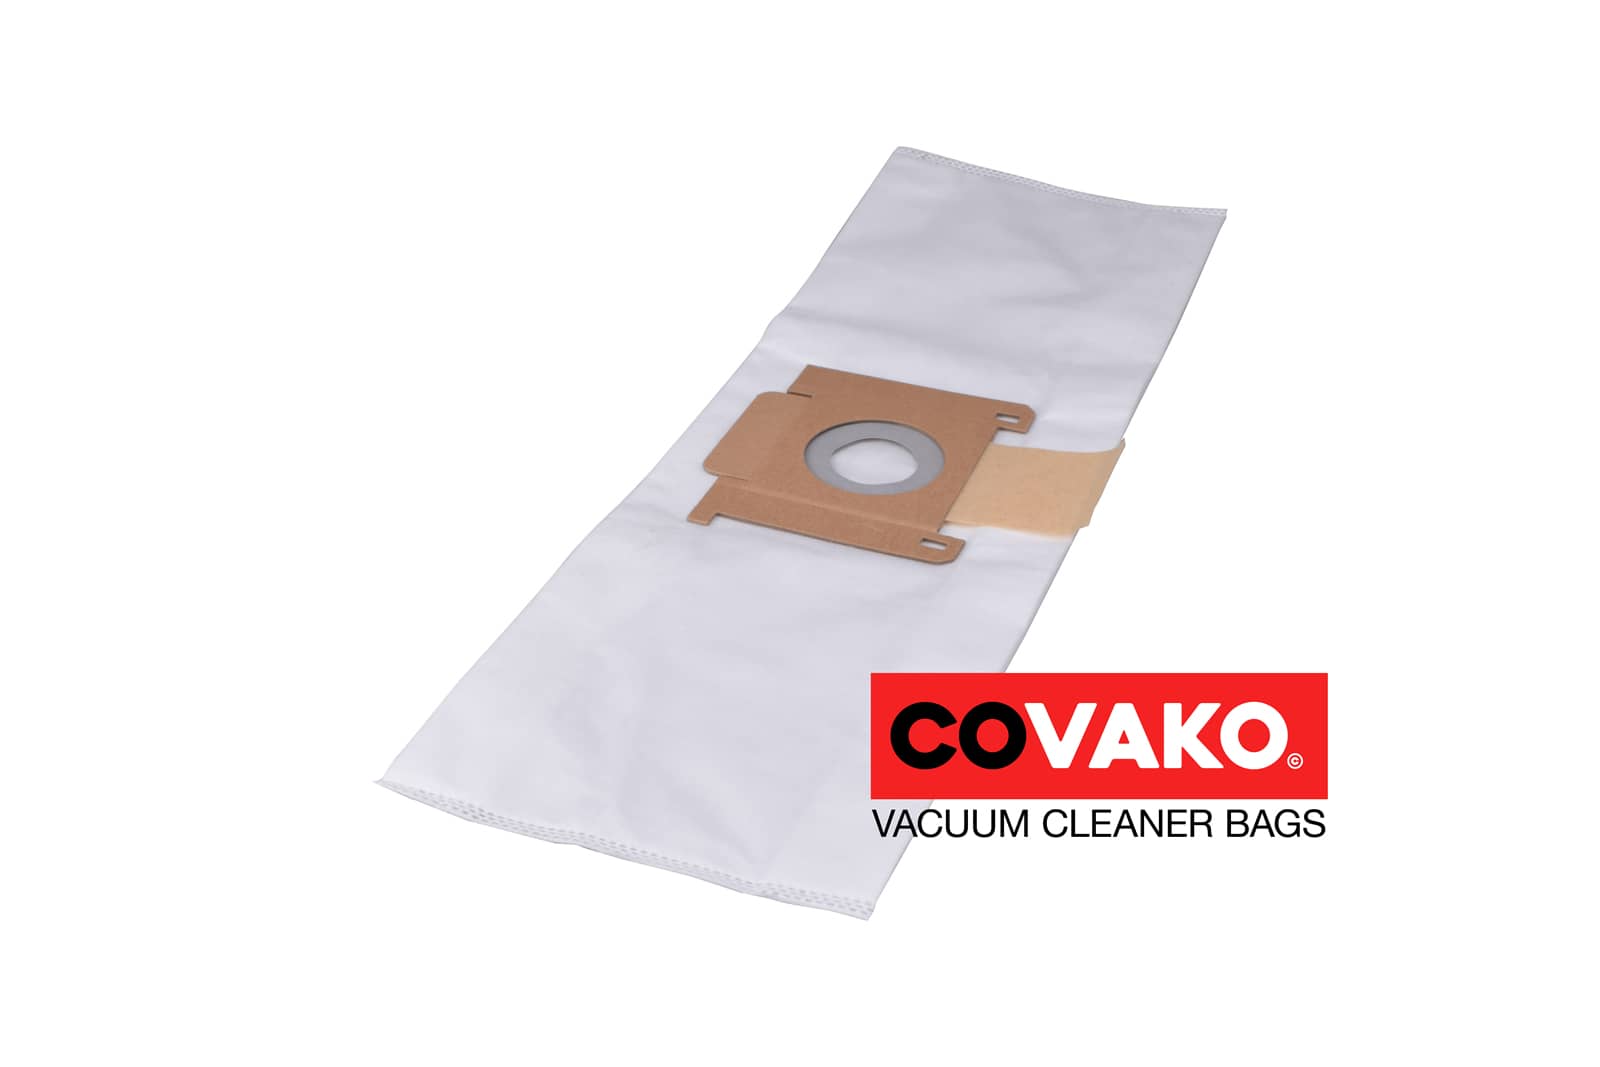 I-vac i-vac 6 / Synthesis - I-vac vacuum cleaner bags